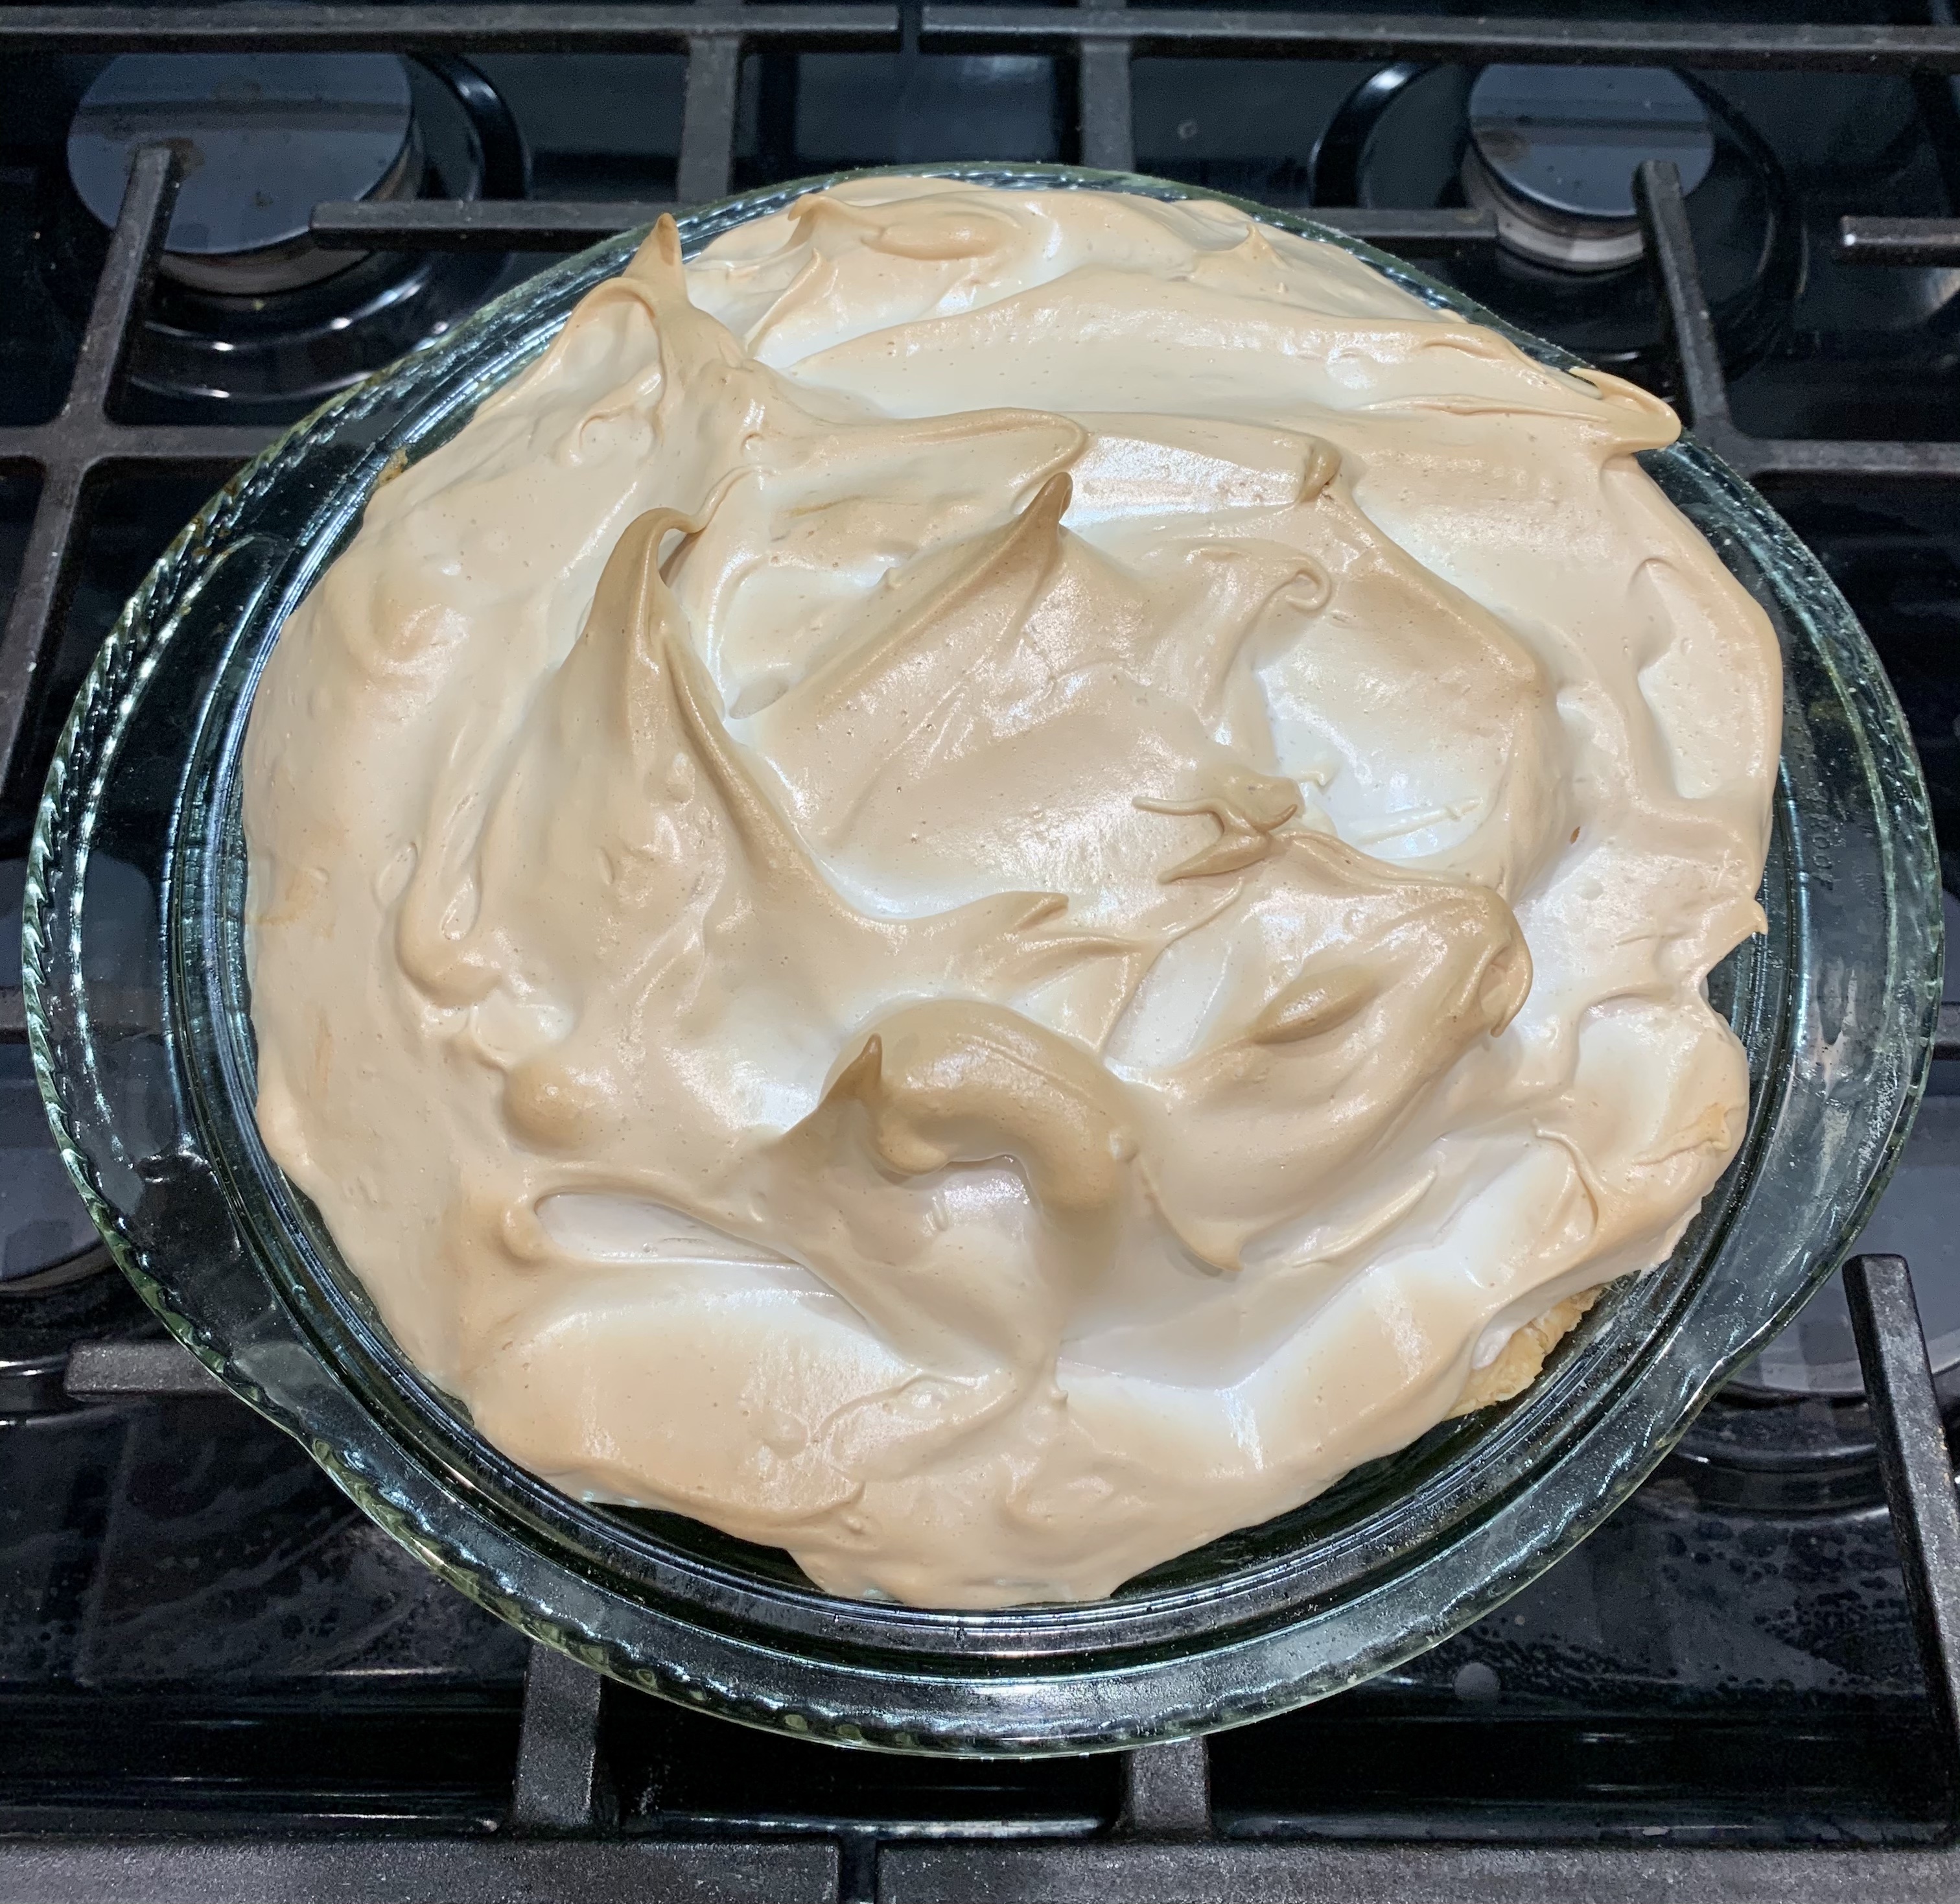 top of lemon meringue pie, white chiffon-like meringue on top, in a glass dish